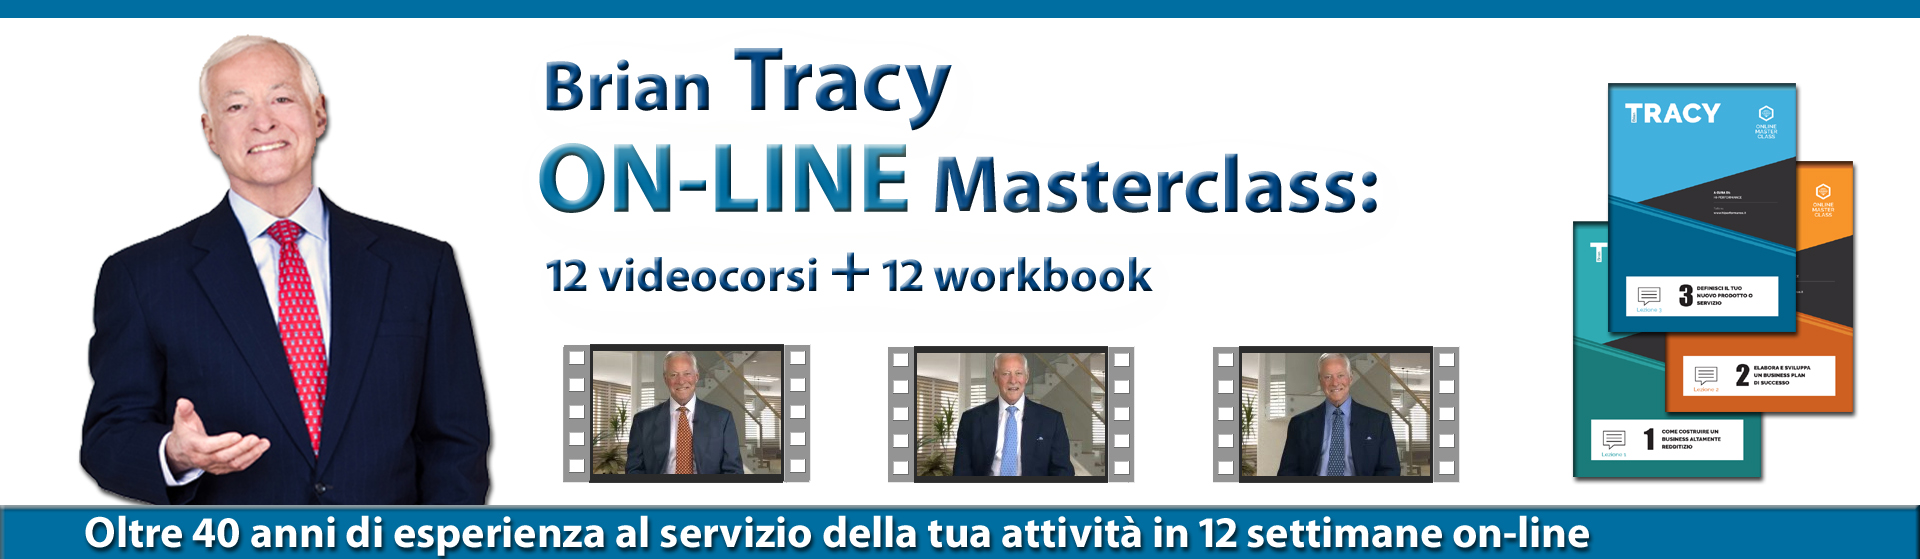 Brian Tracy - Online Masterclass